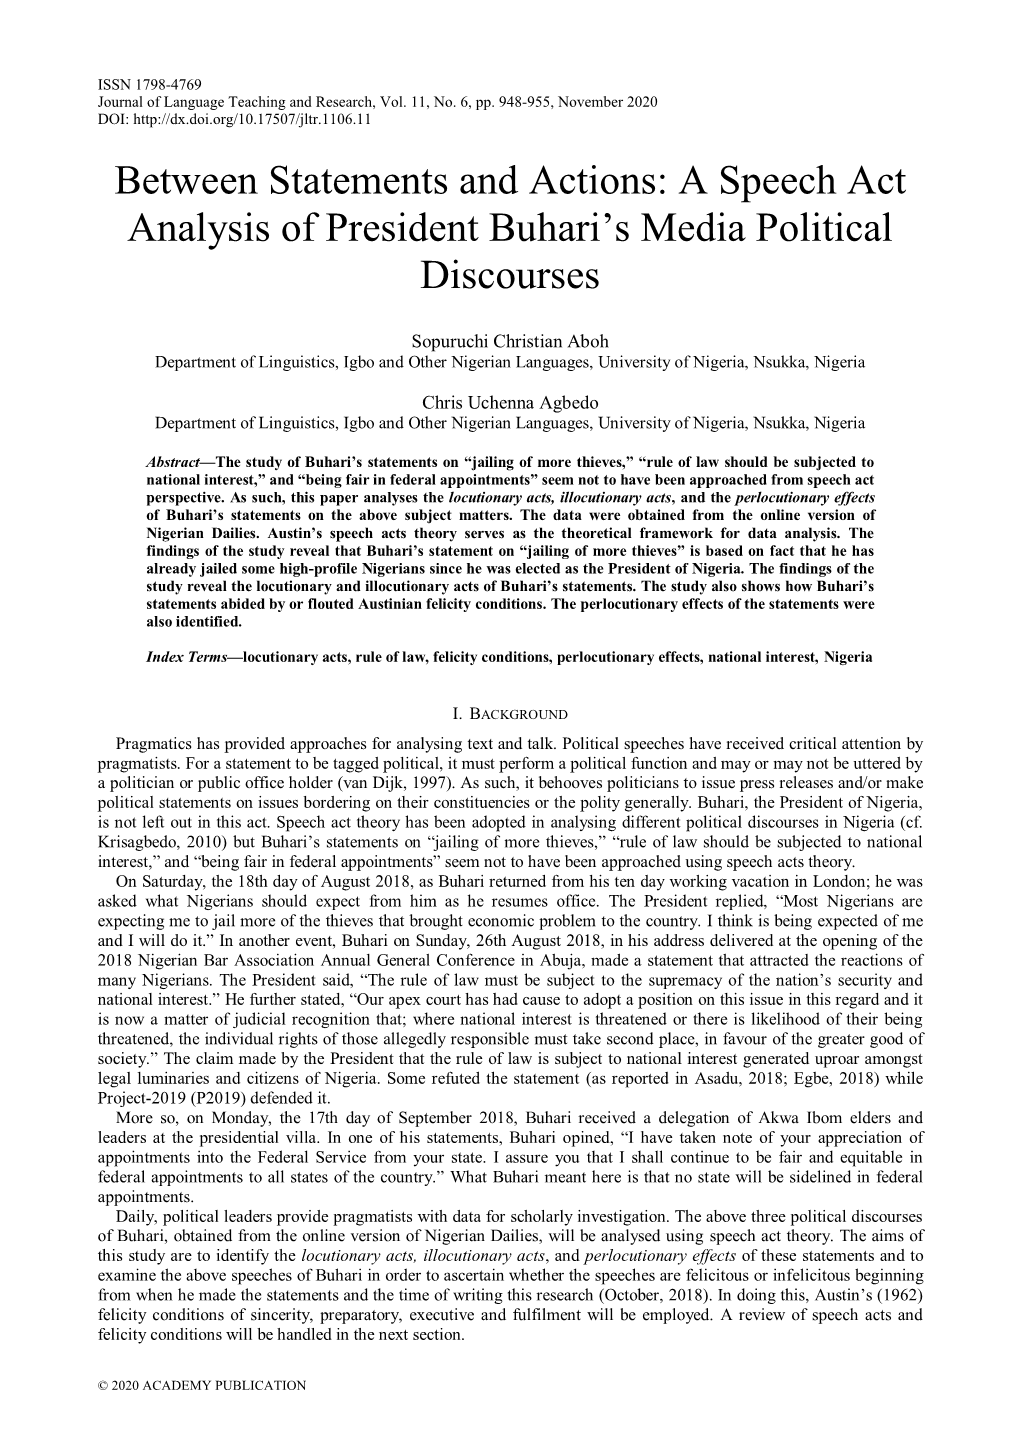 A Speech Act Analysis of President Buhari's